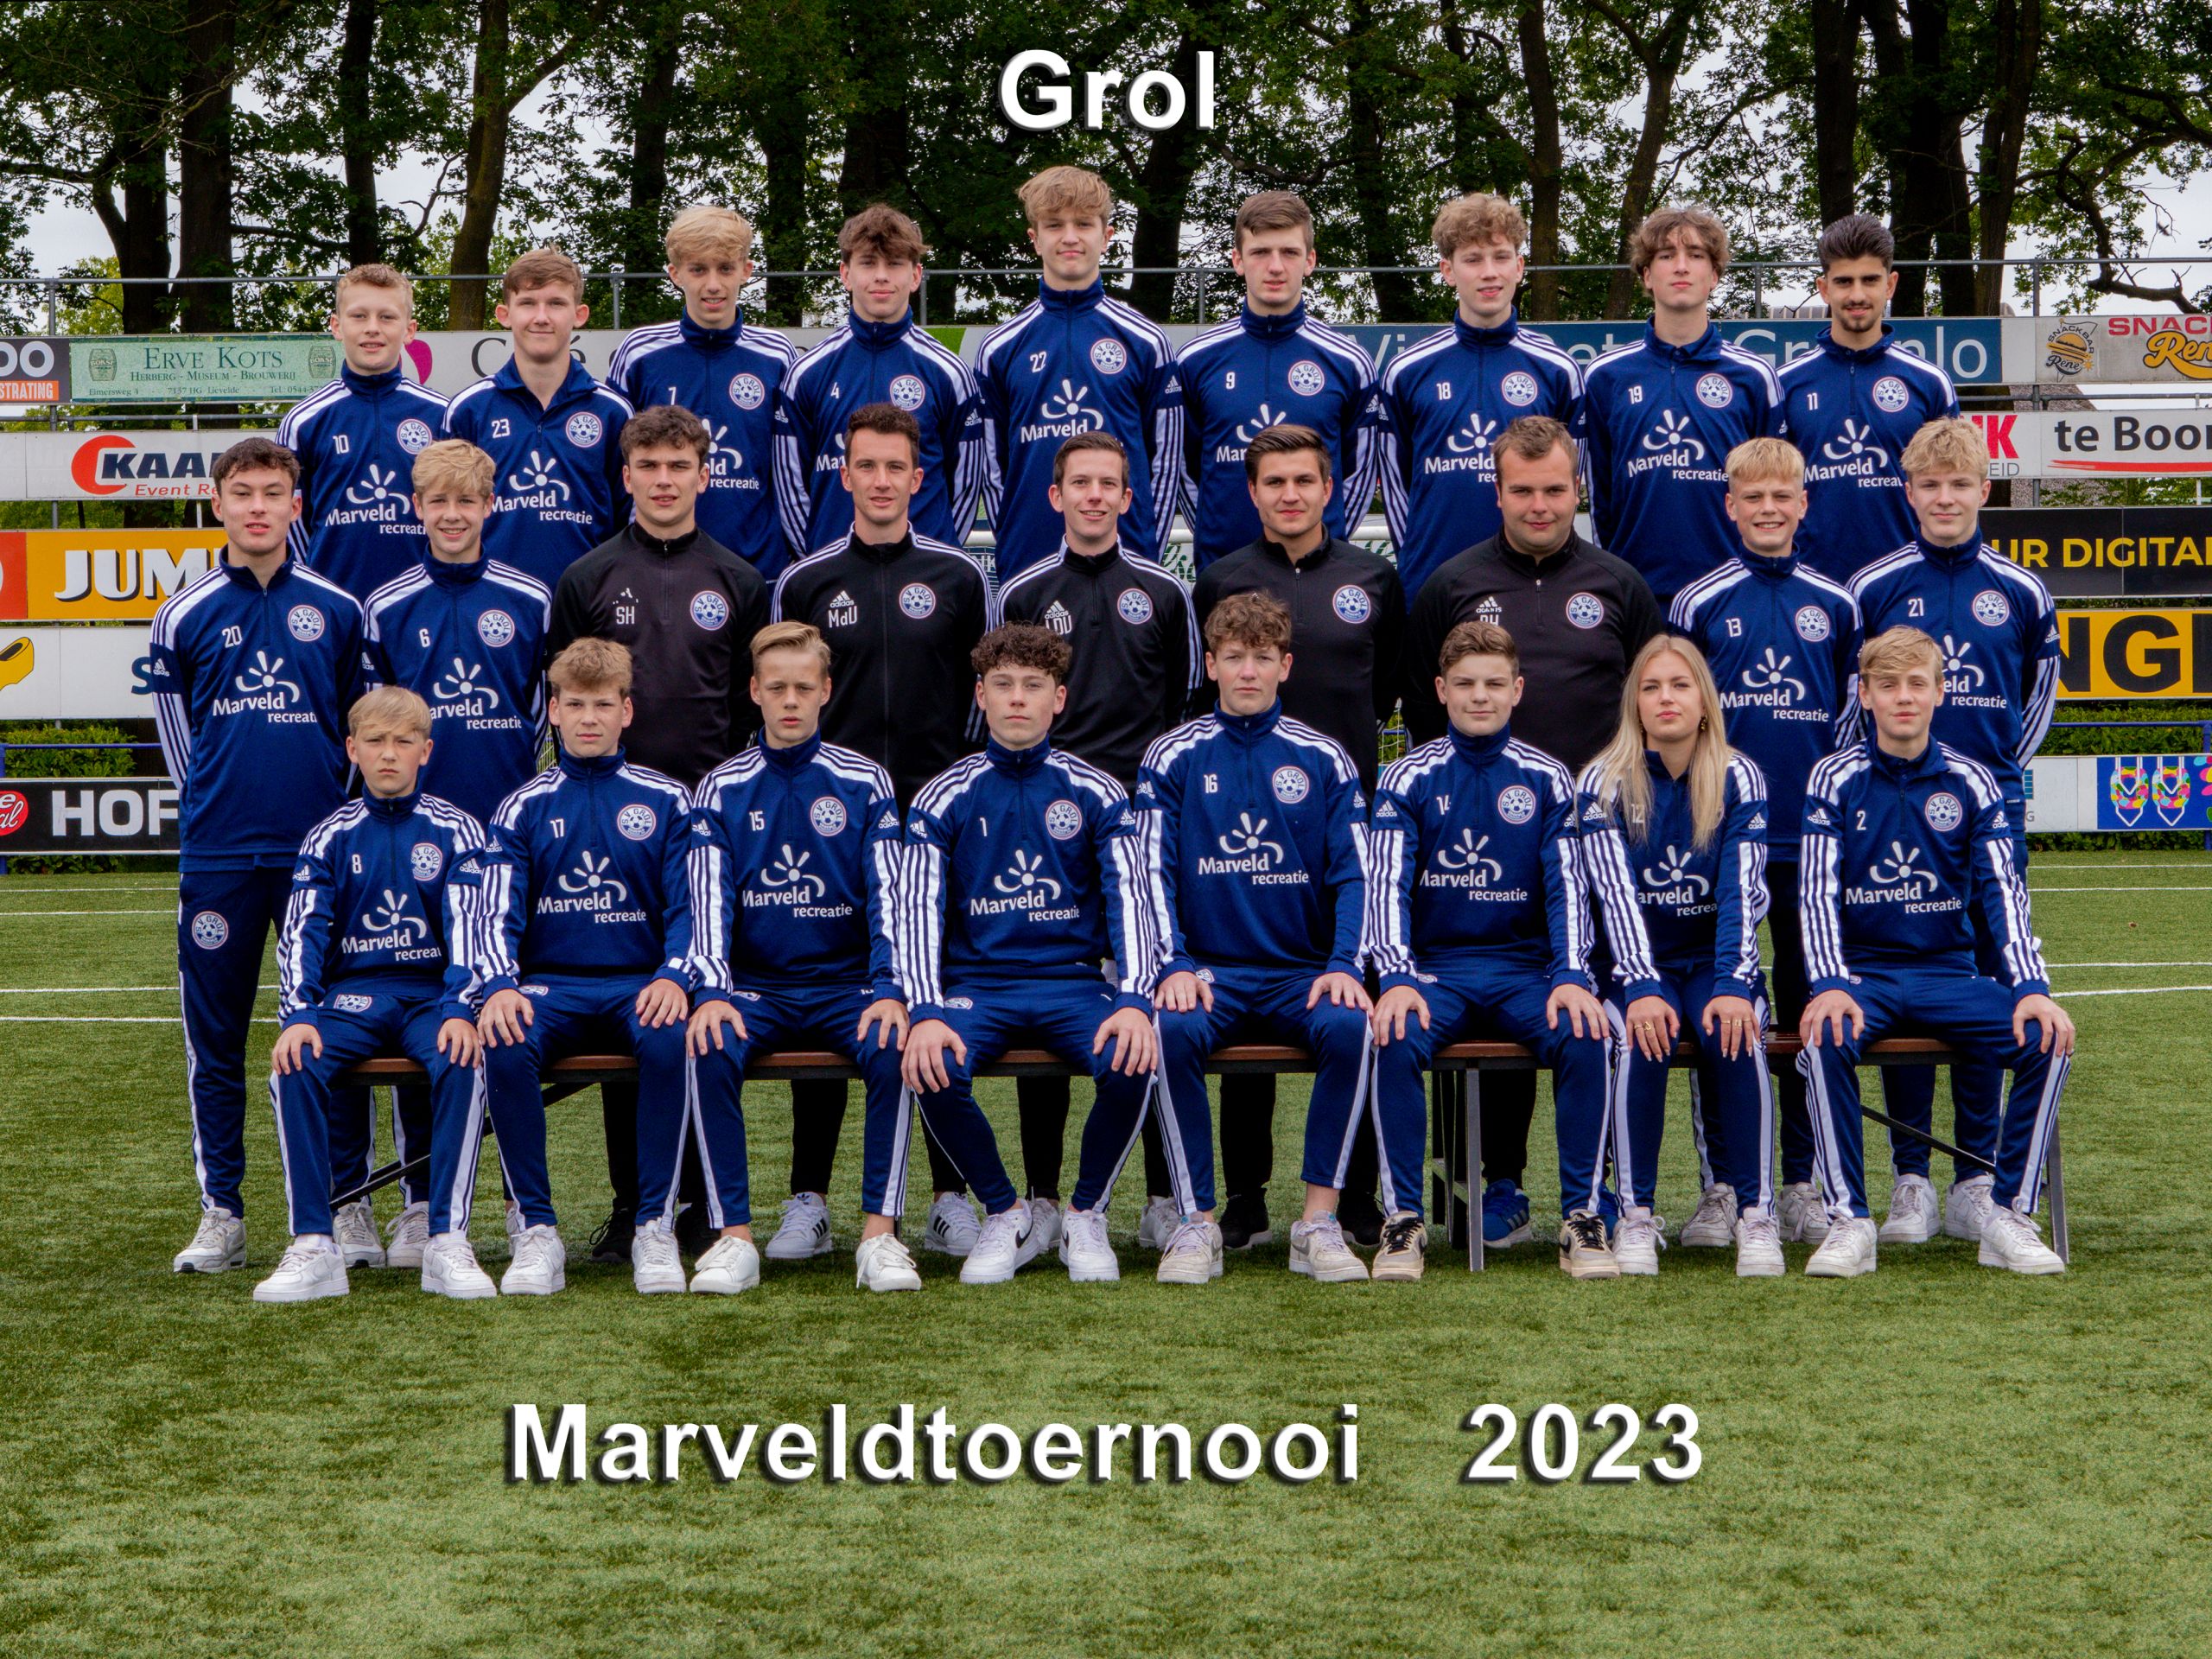 Marveld Tournament 2023 - Team Grol